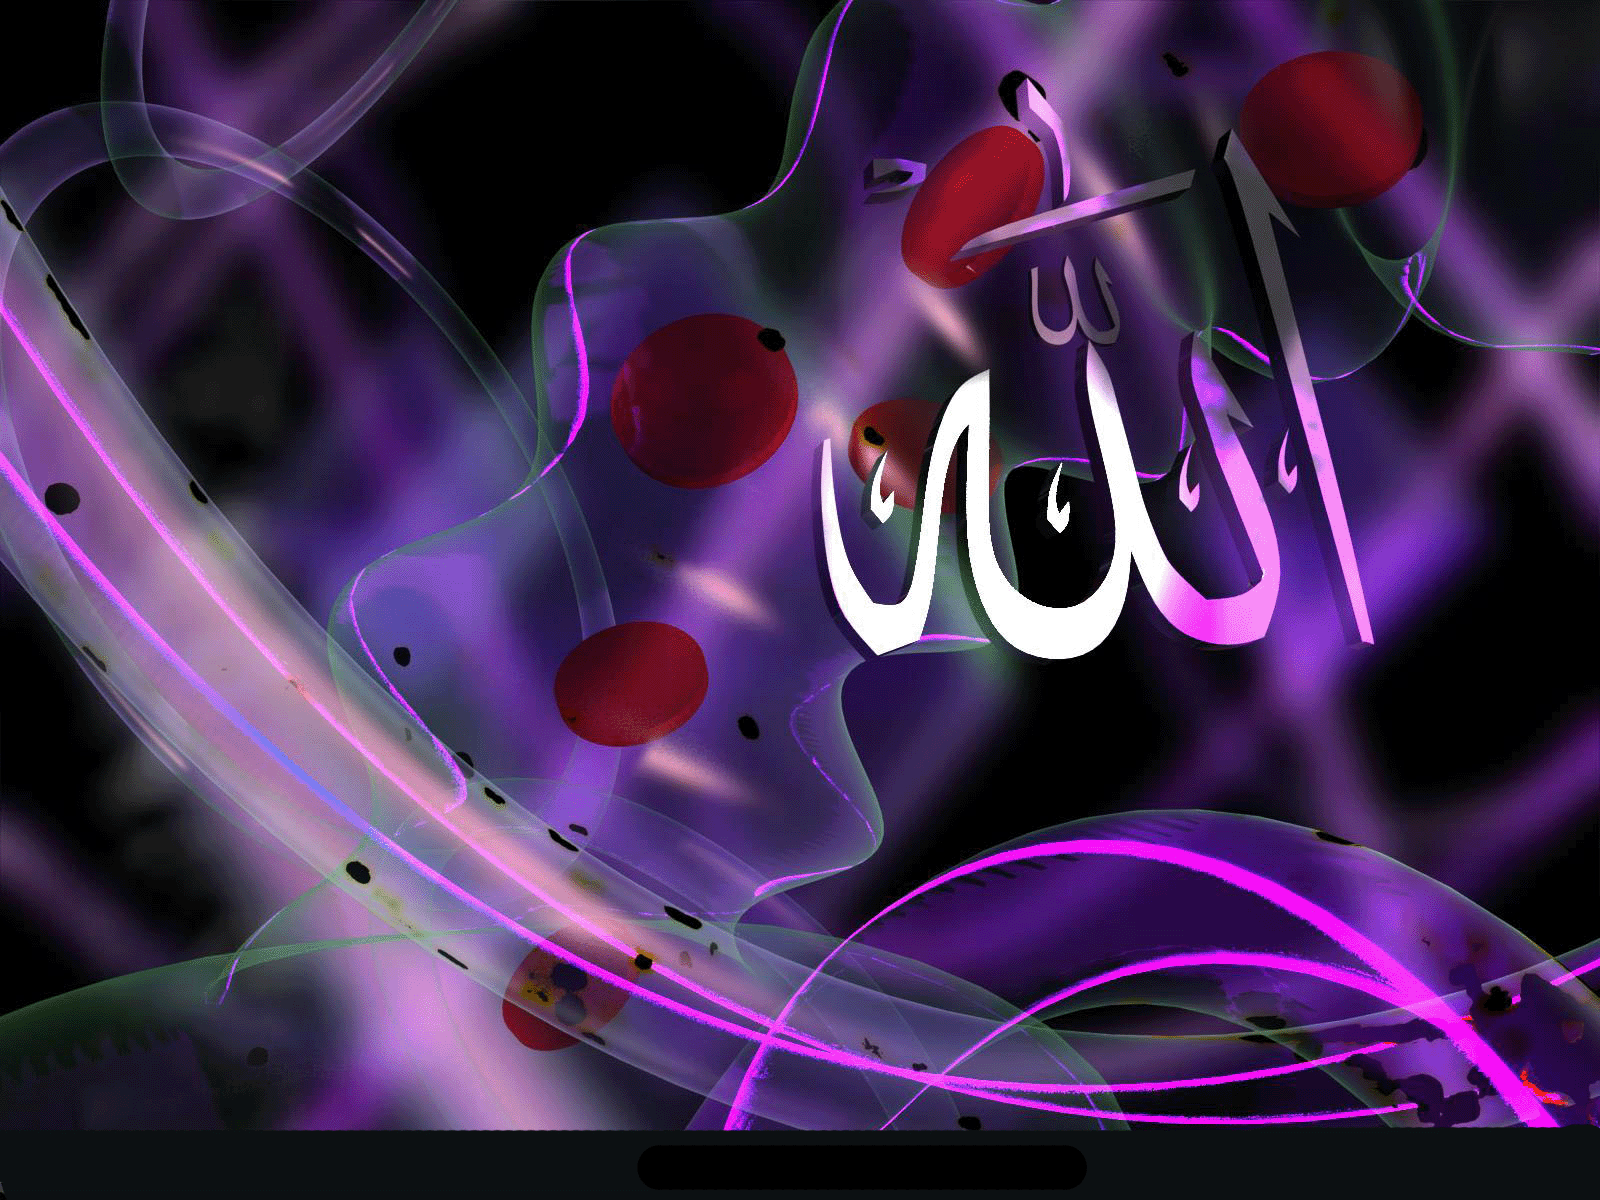 Allah Muhammad Wallpapers Desktop 3d Wallpaper Cave